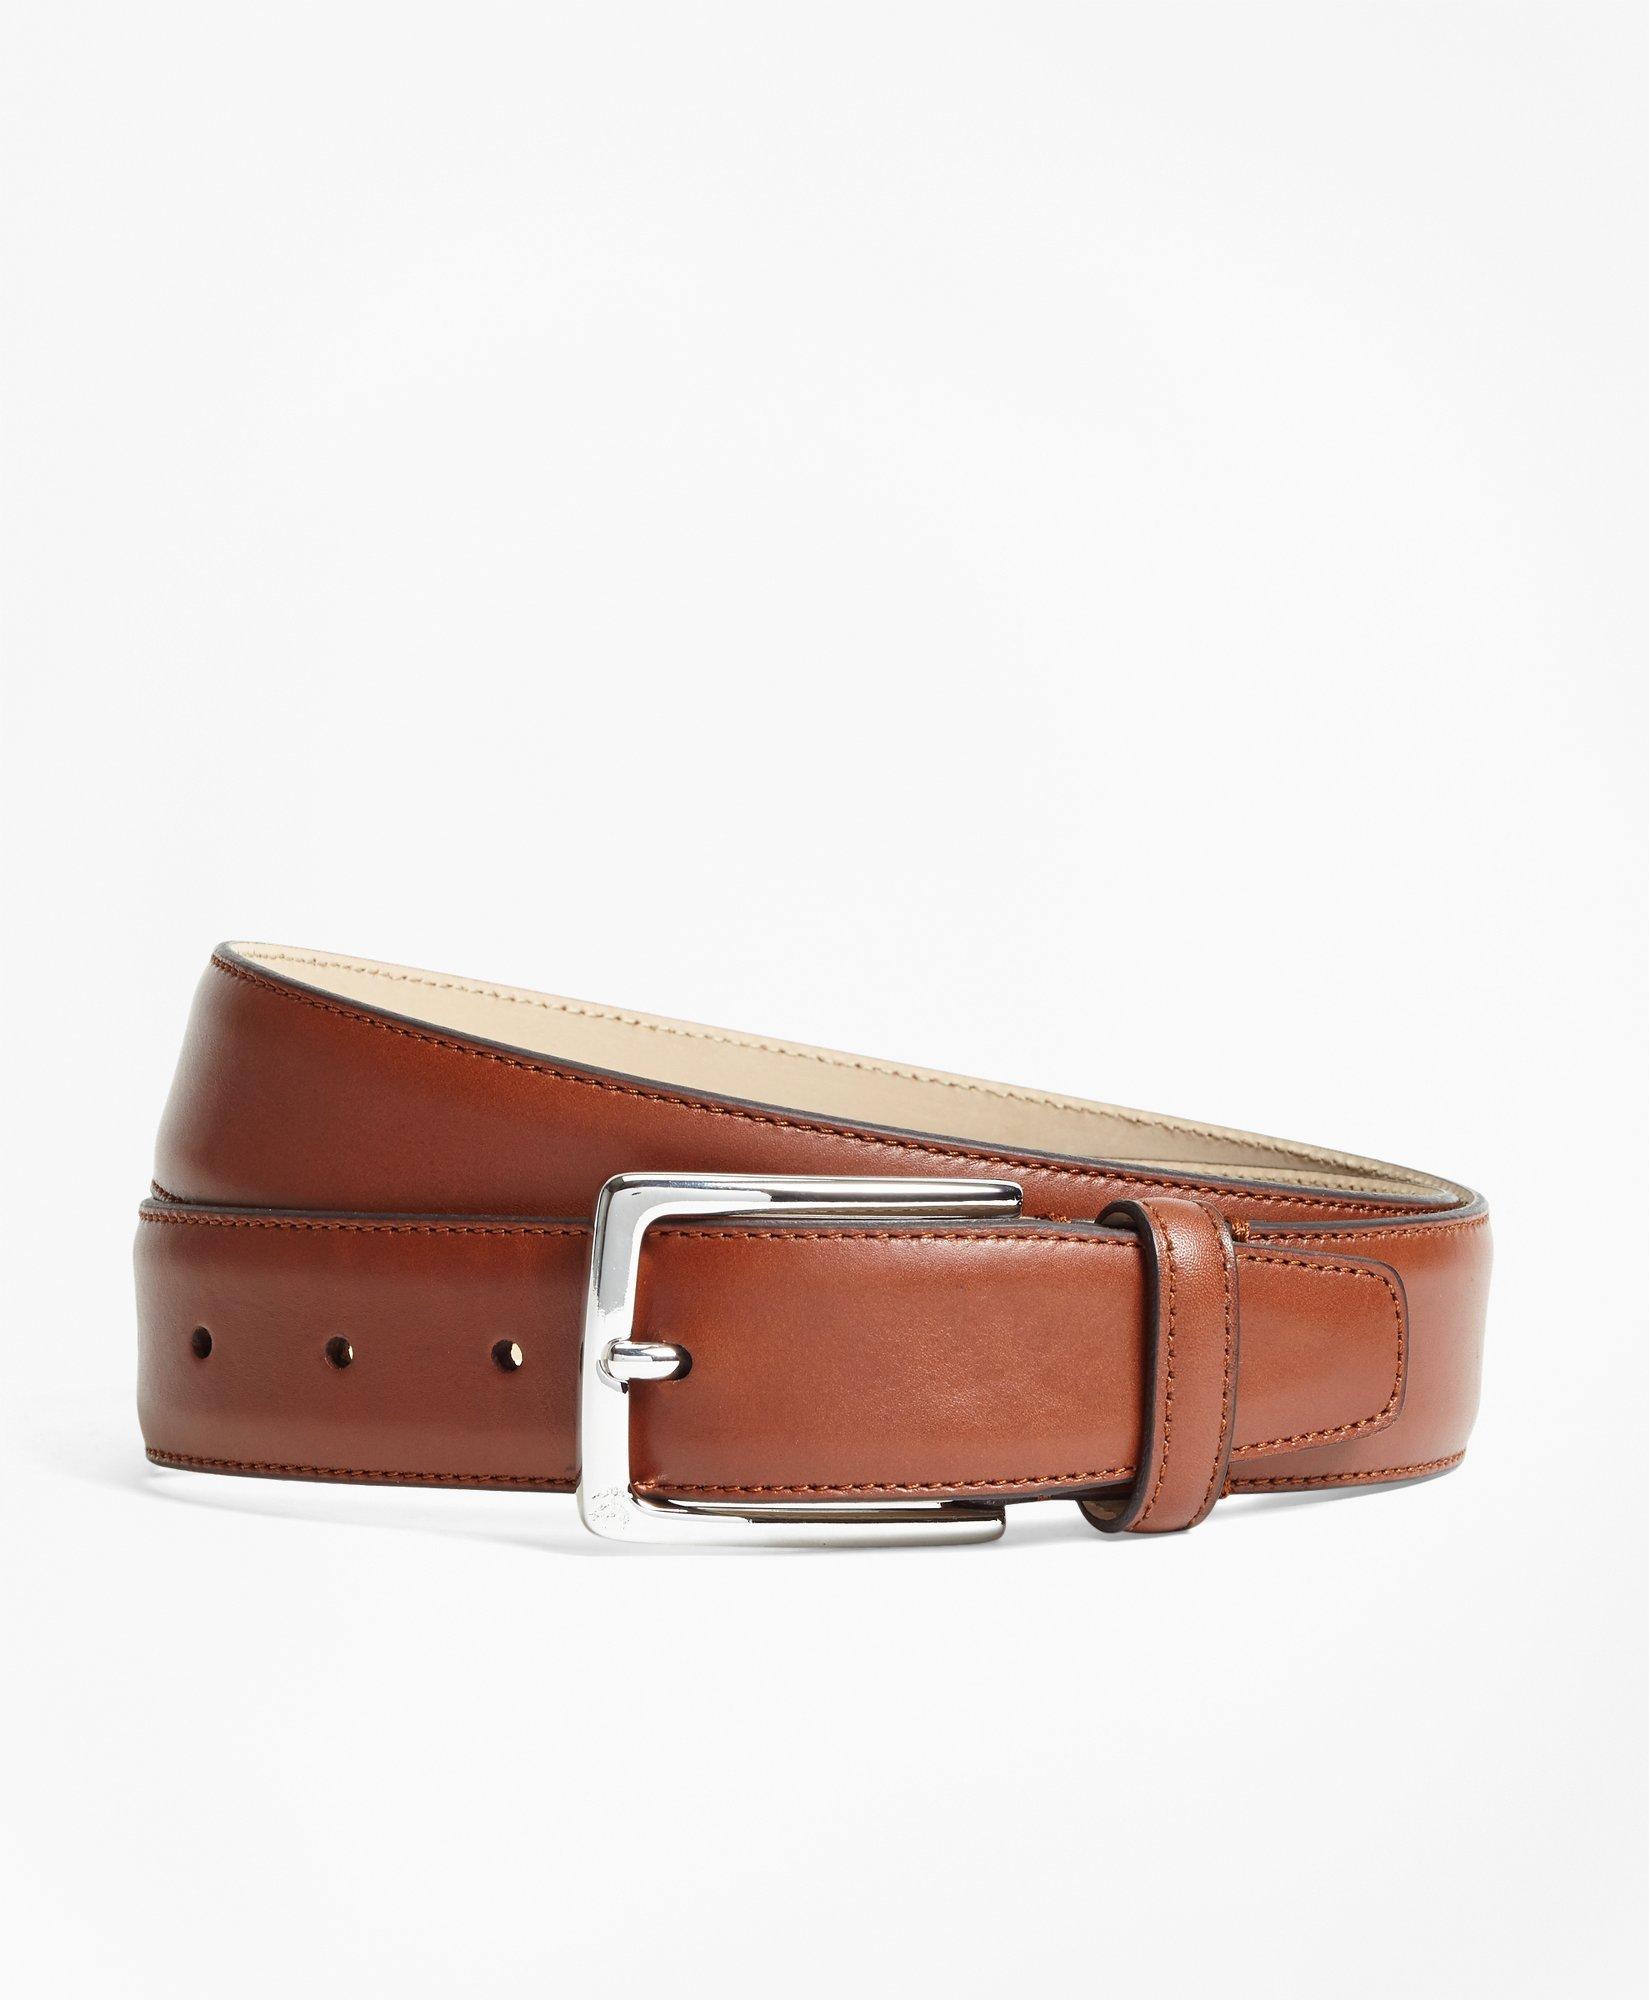 Brooks Brothers 1818 Leather Belt | Cognac | Size 40